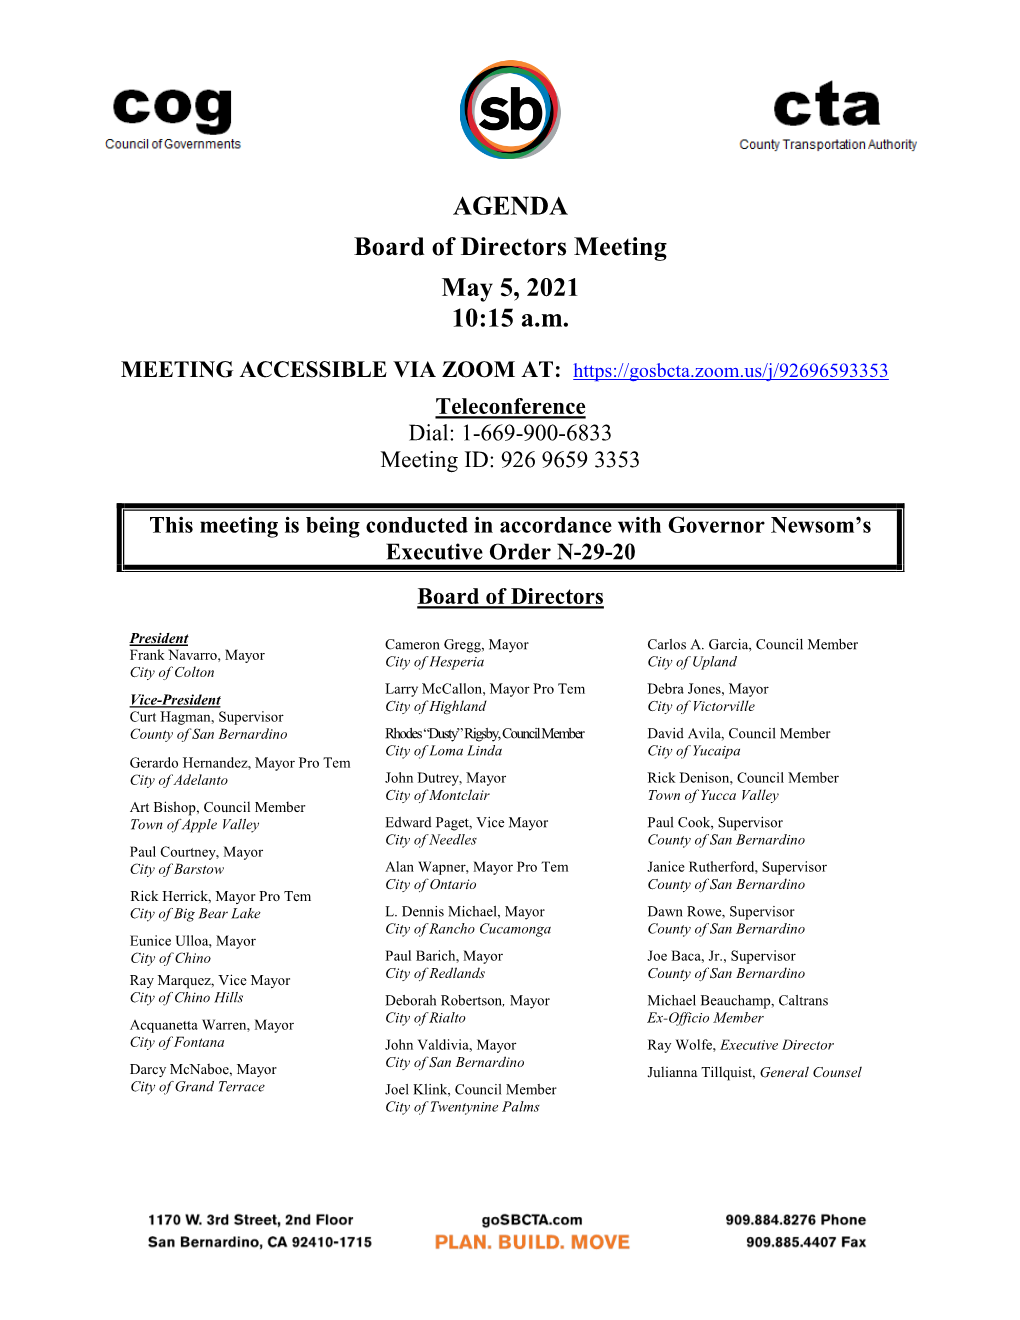 AGENDA Board of Directors Meeting May 5, 2021 10:15 Am